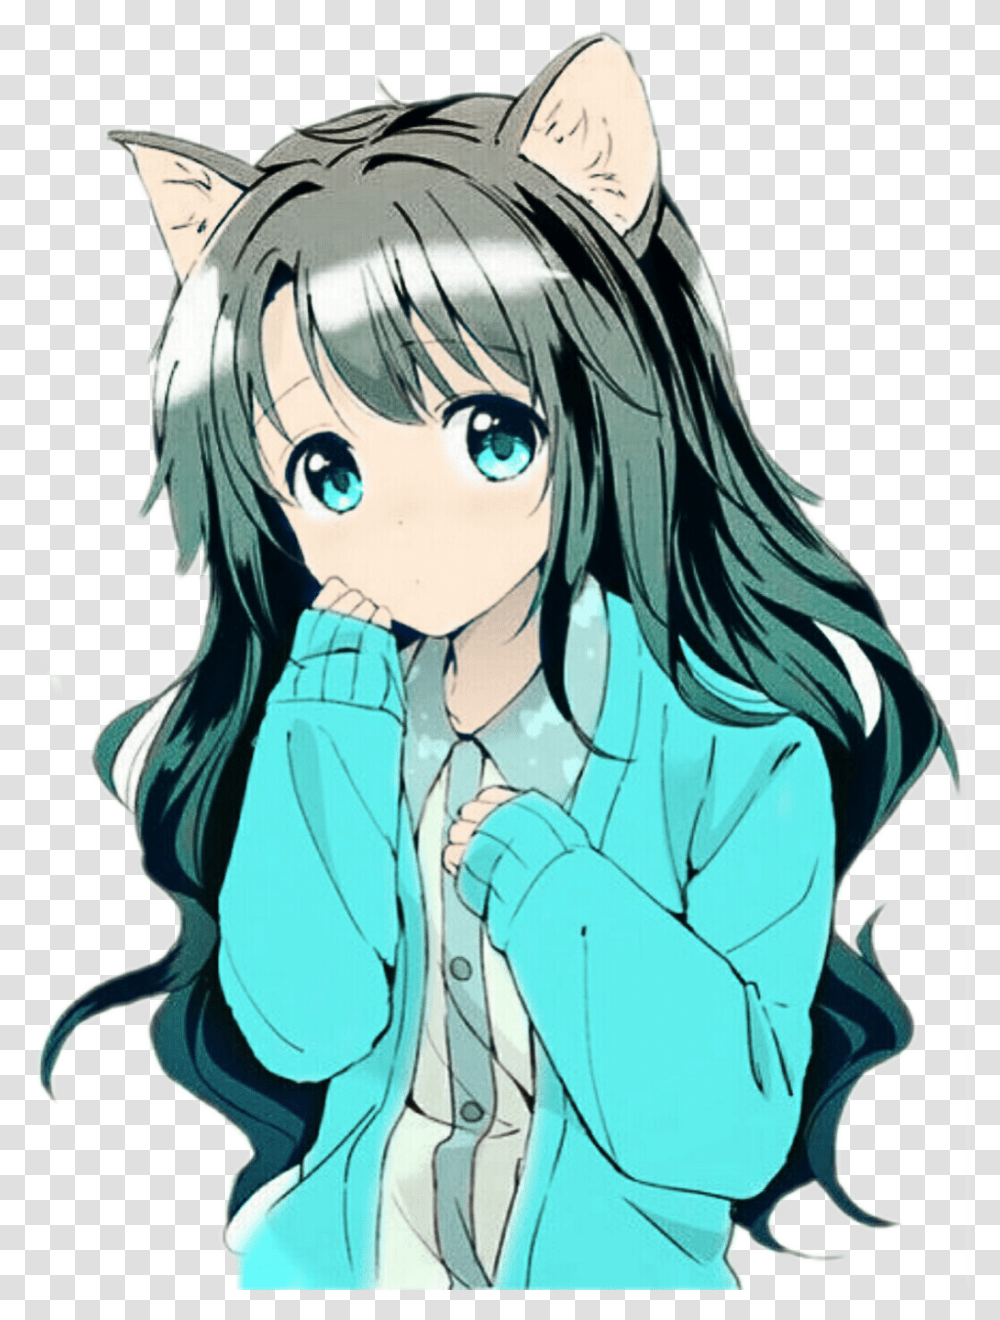 Anime Girl Cat Kawaii Image Shy Cute Anime Girl, Manga, Comics, Book, Person Transparent Png